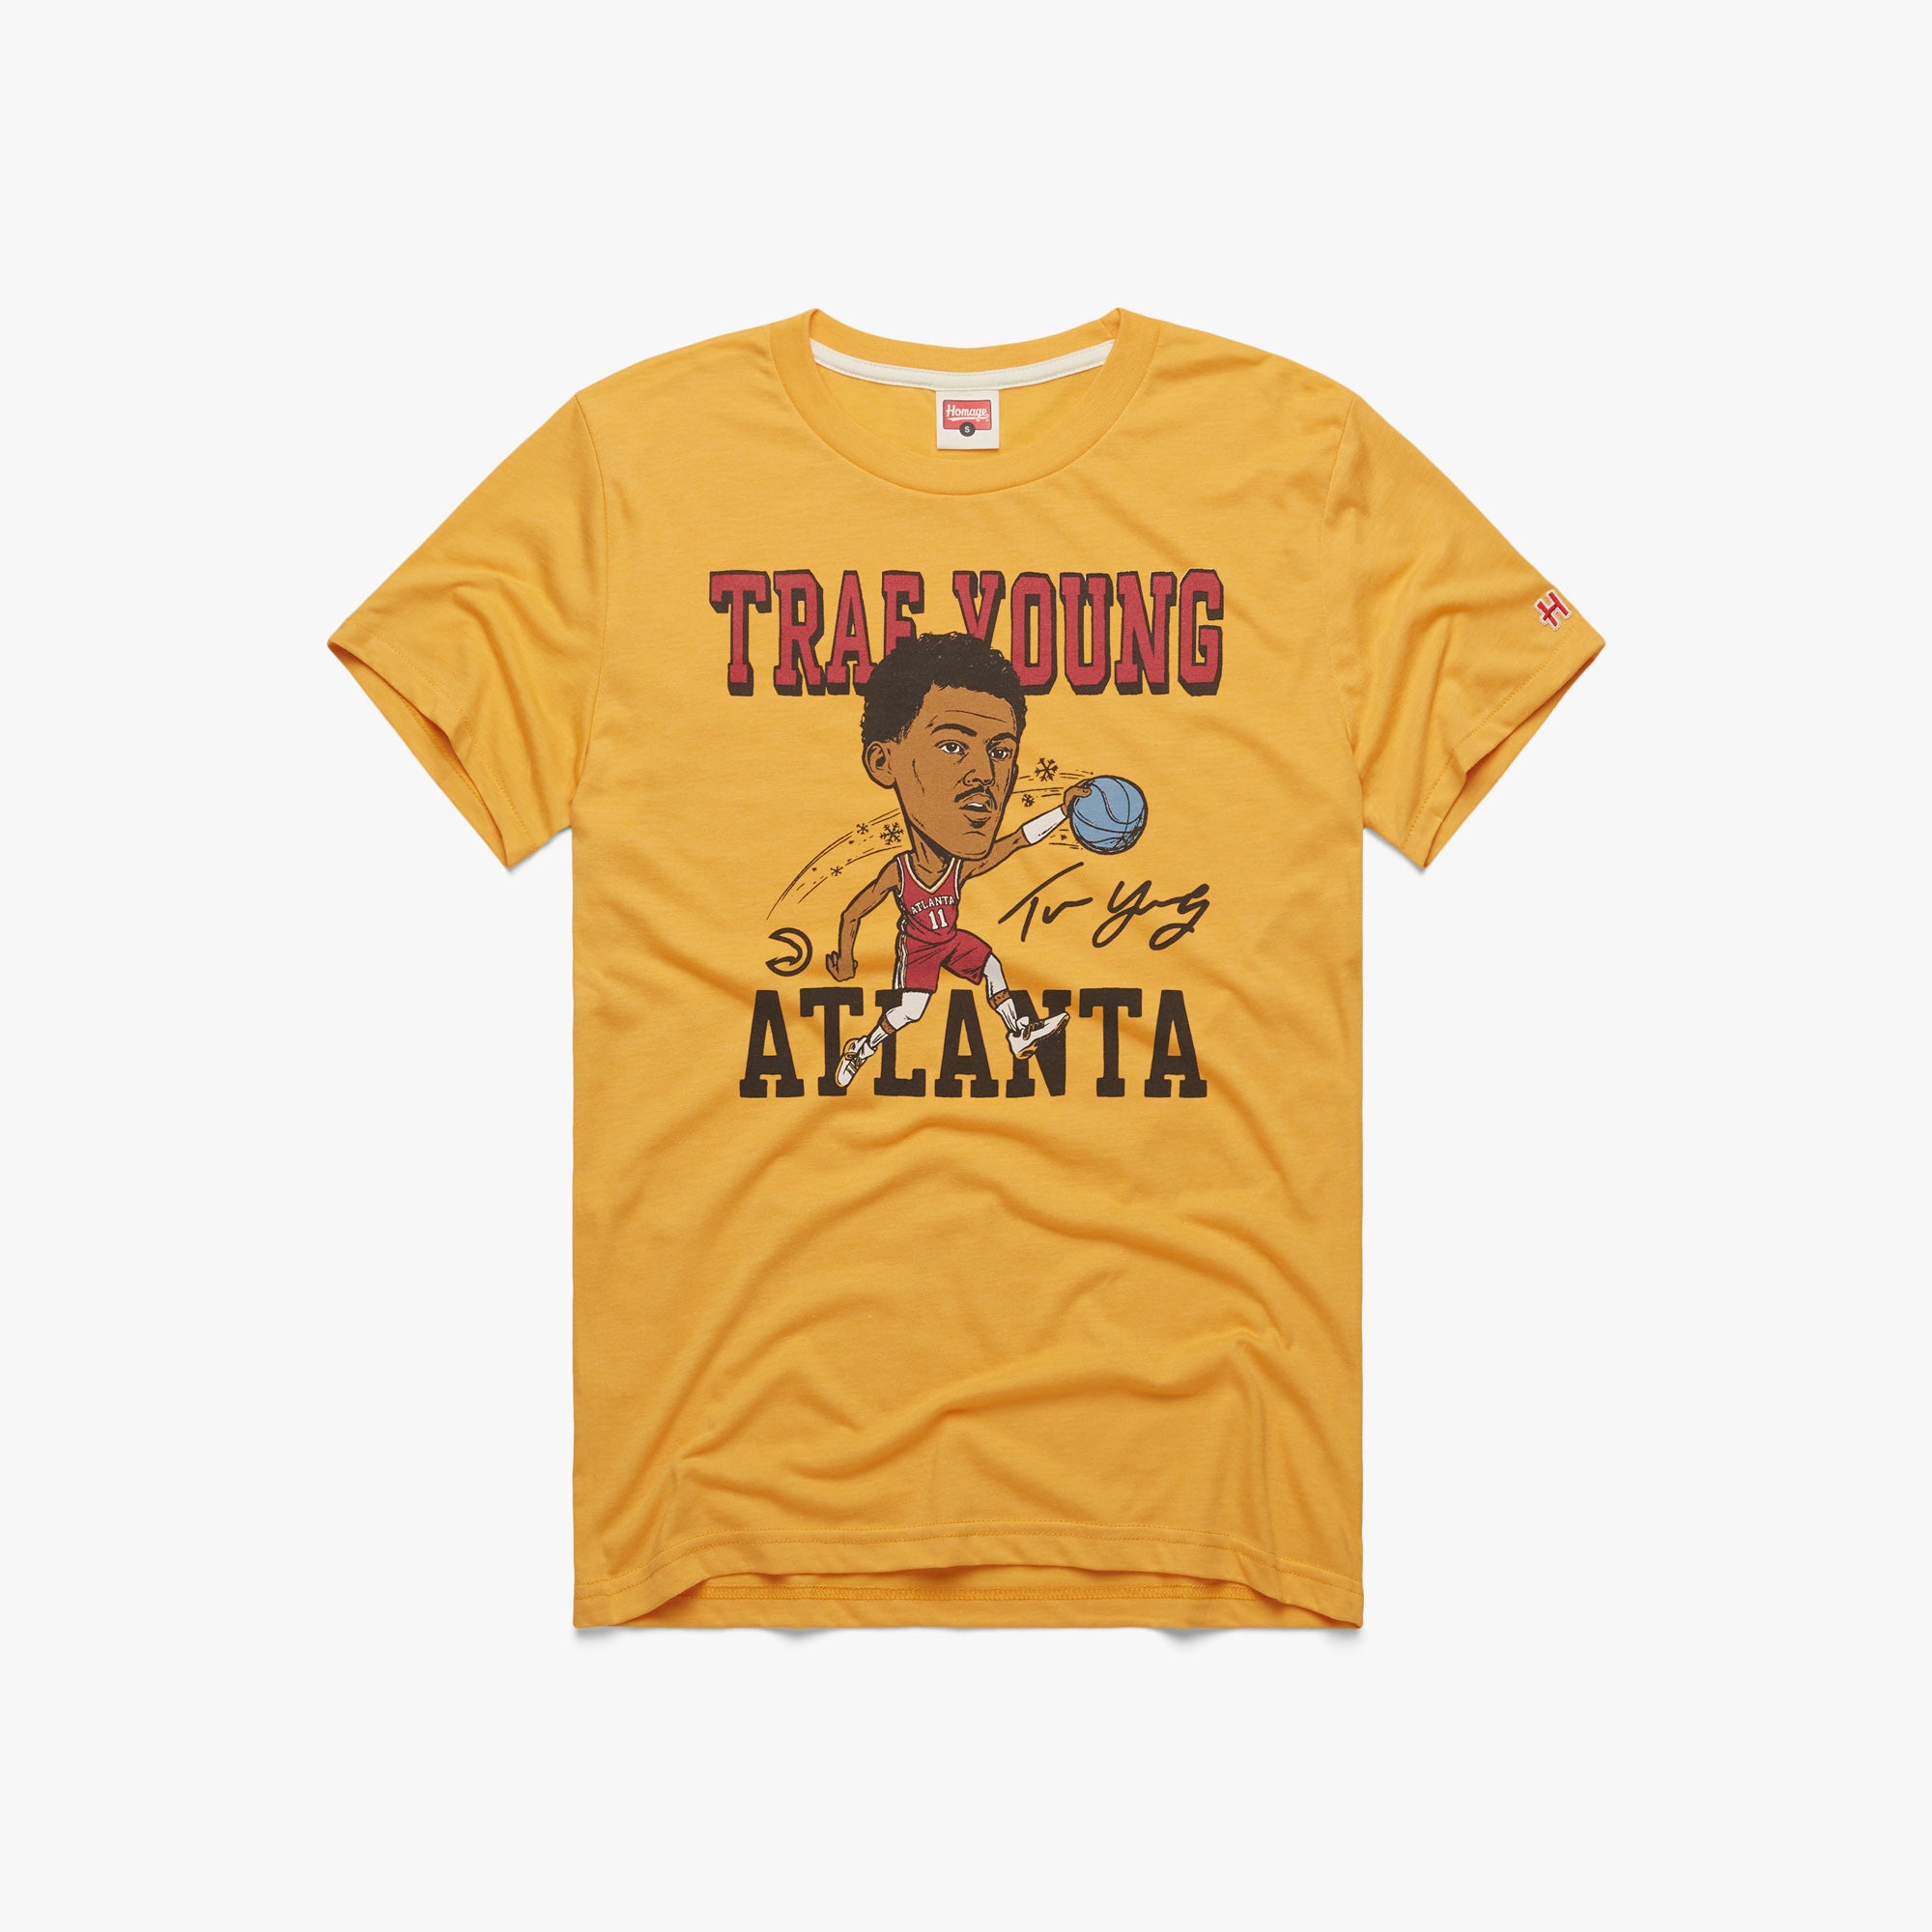 Trae Young Signed Atlanta Hawks Shirt - CharityStars